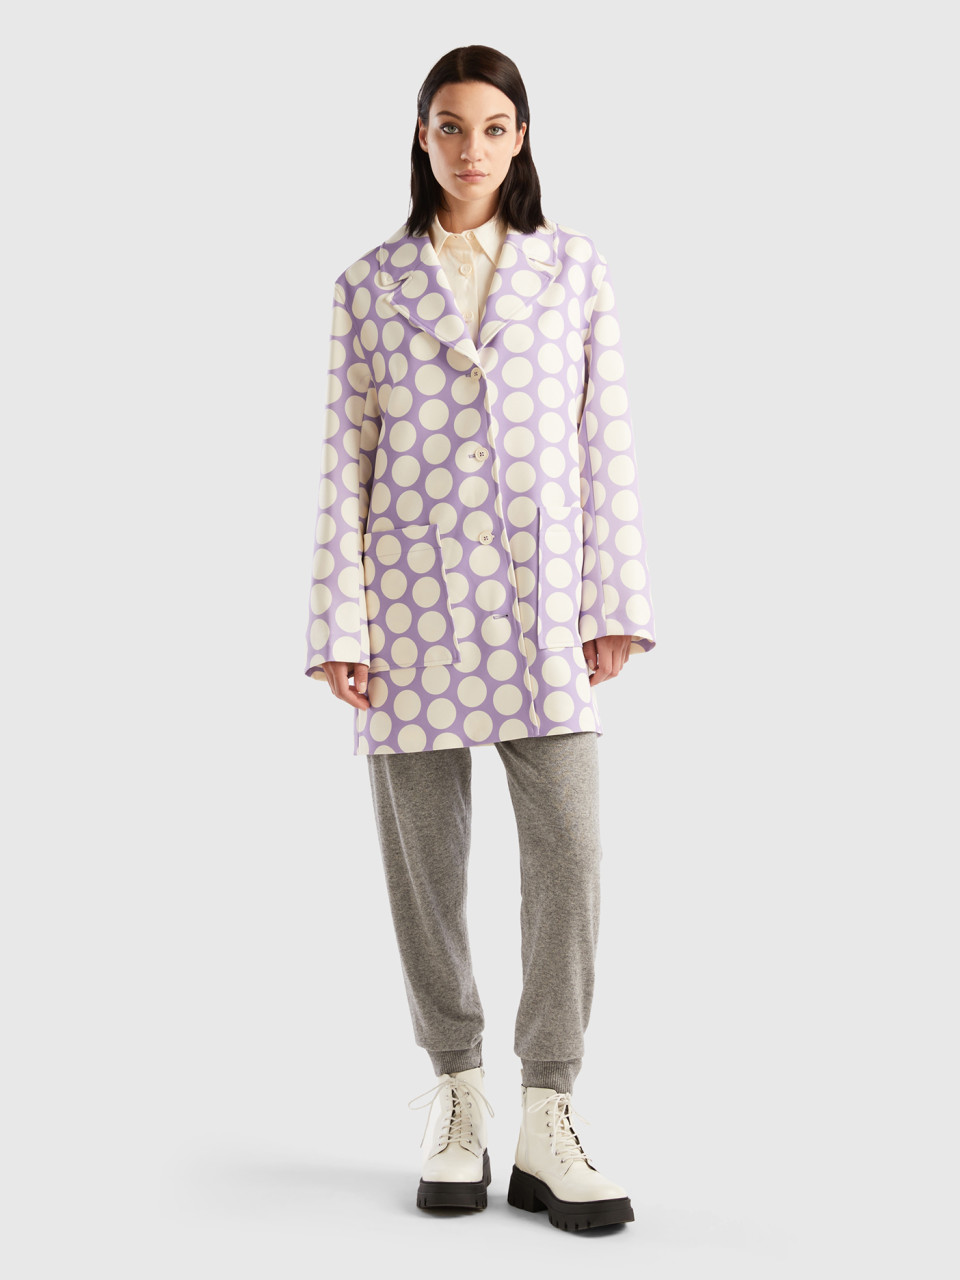 Benetton, Coat With Polka Dot Print, Lilac, Women